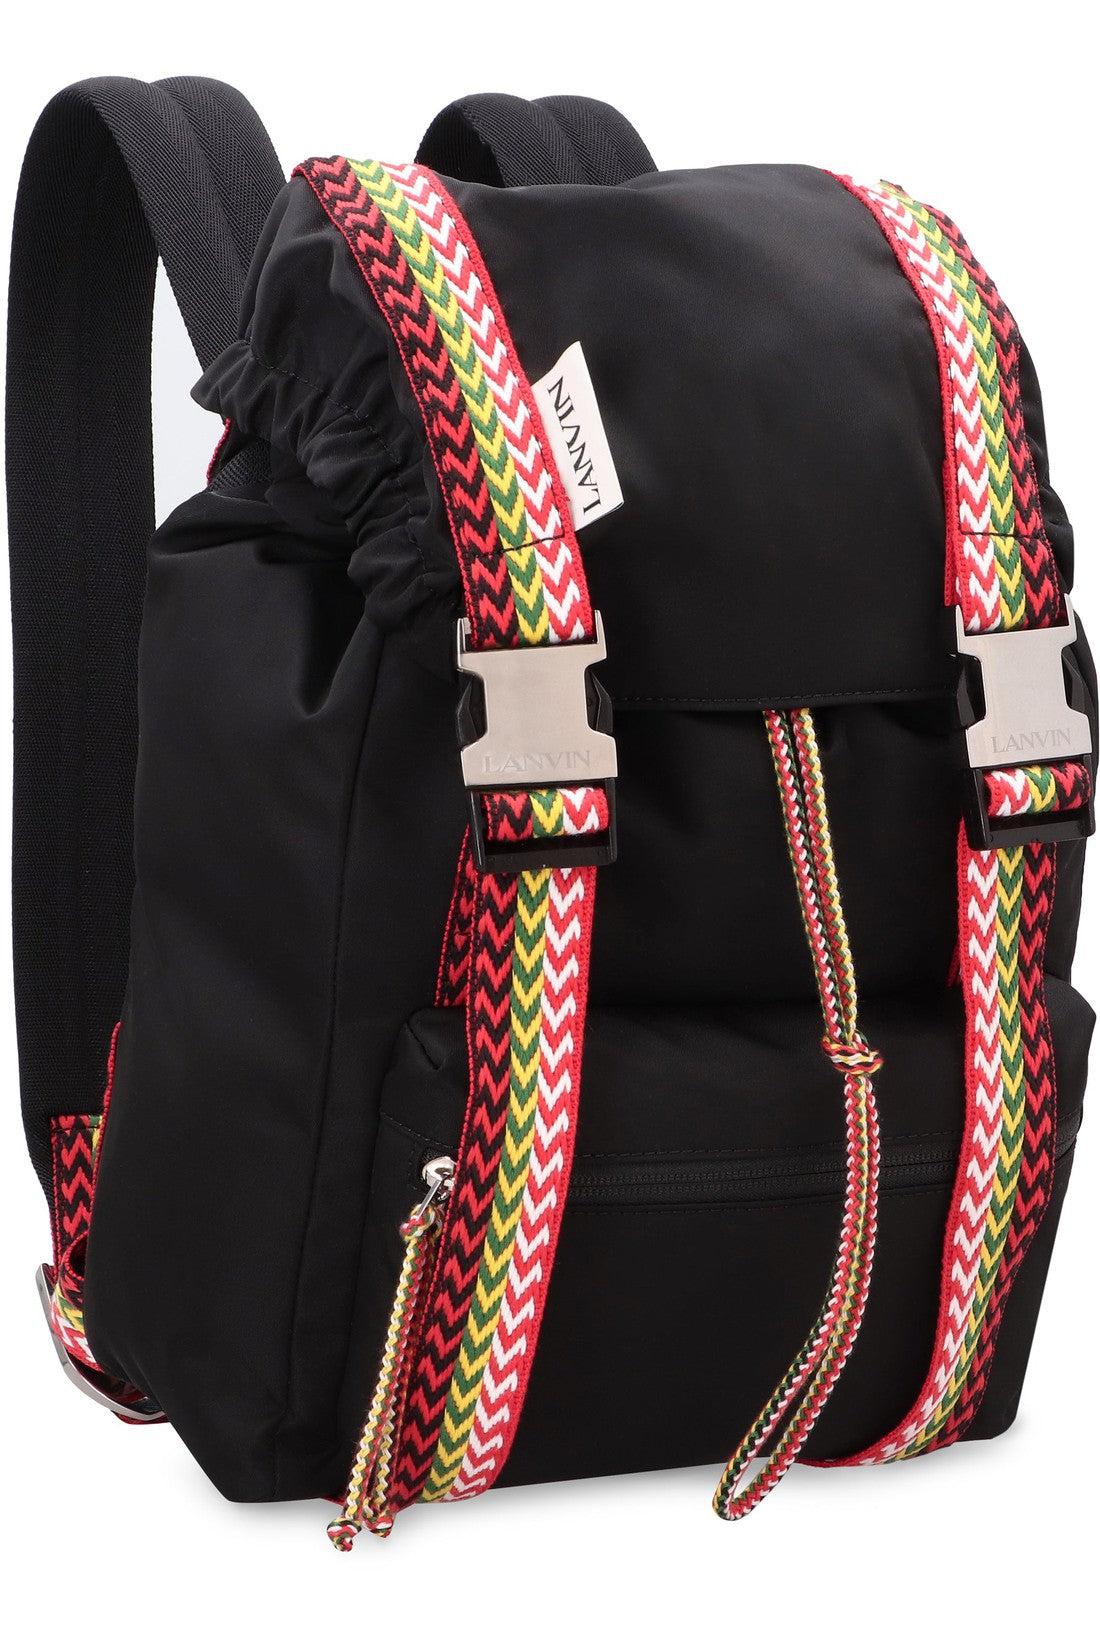 Lanvin-OUTLET-SALE-Nano Curb nylon backpack-ARCHIVIST